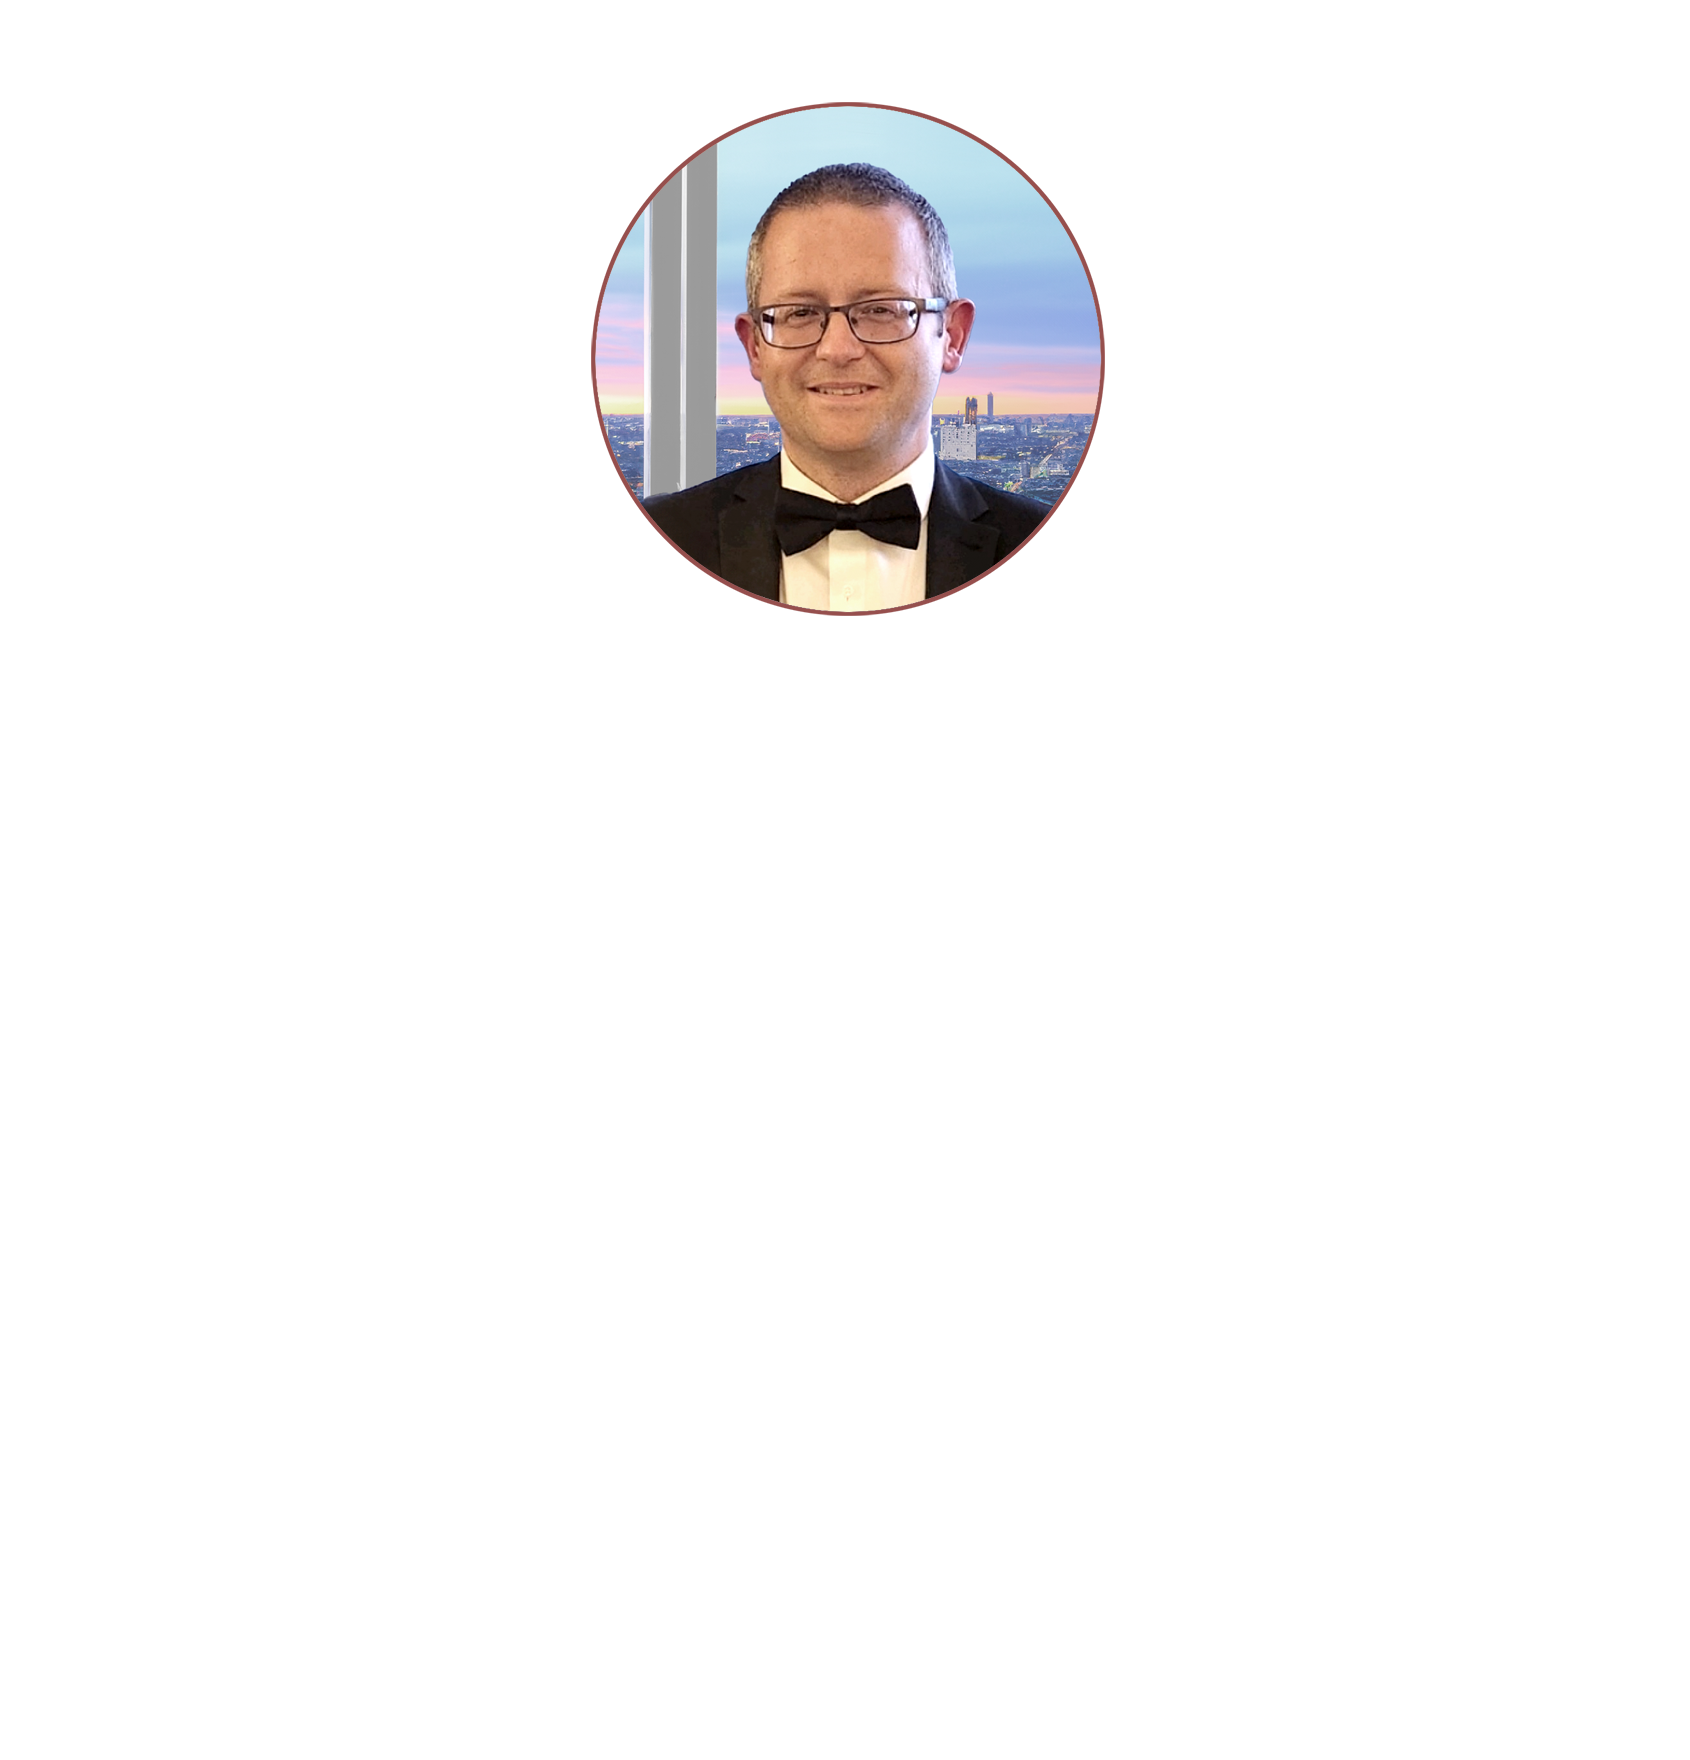 Richard Stephenson